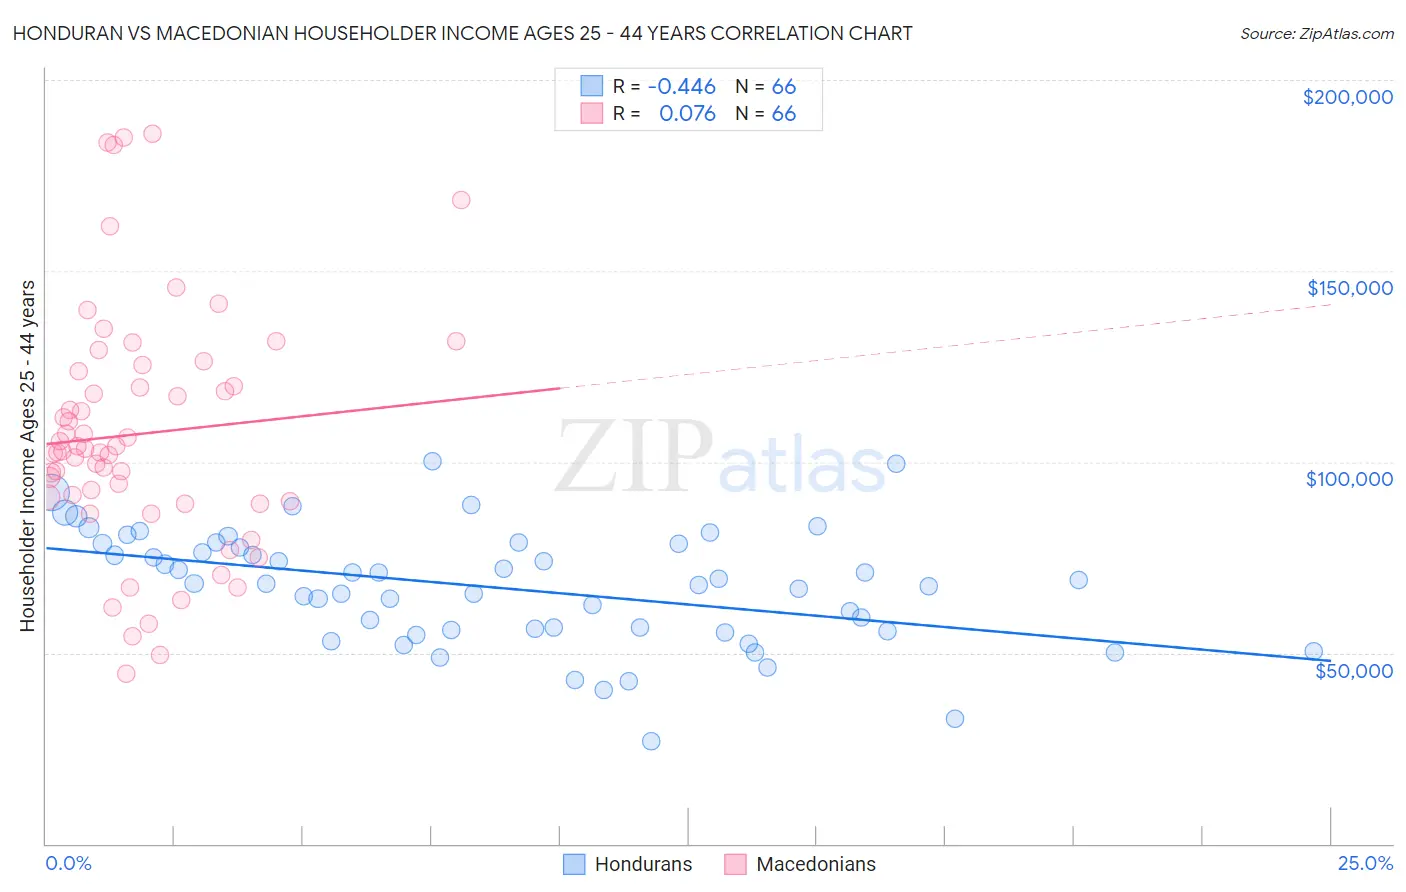 Honduran vs Macedonian Householder Income Ages 25 - 44 years